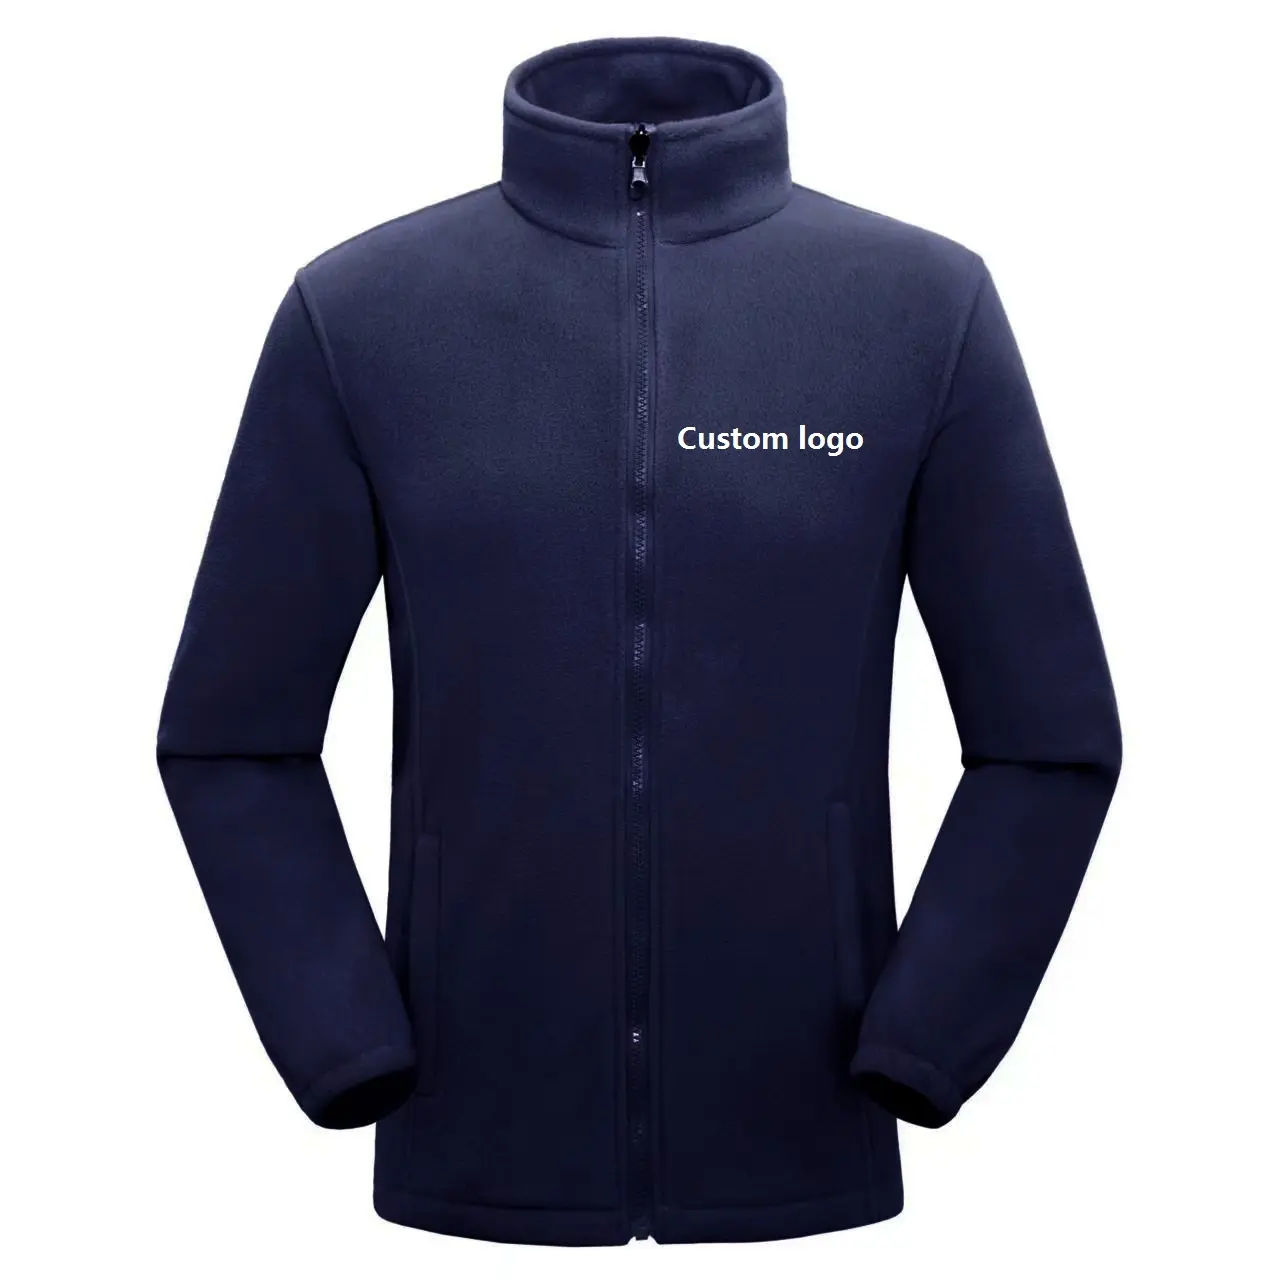 Wholesales High Quality Custom Polar Jackets Casual Outwear Rain Jacket Double Zipper Men Winter Clothes